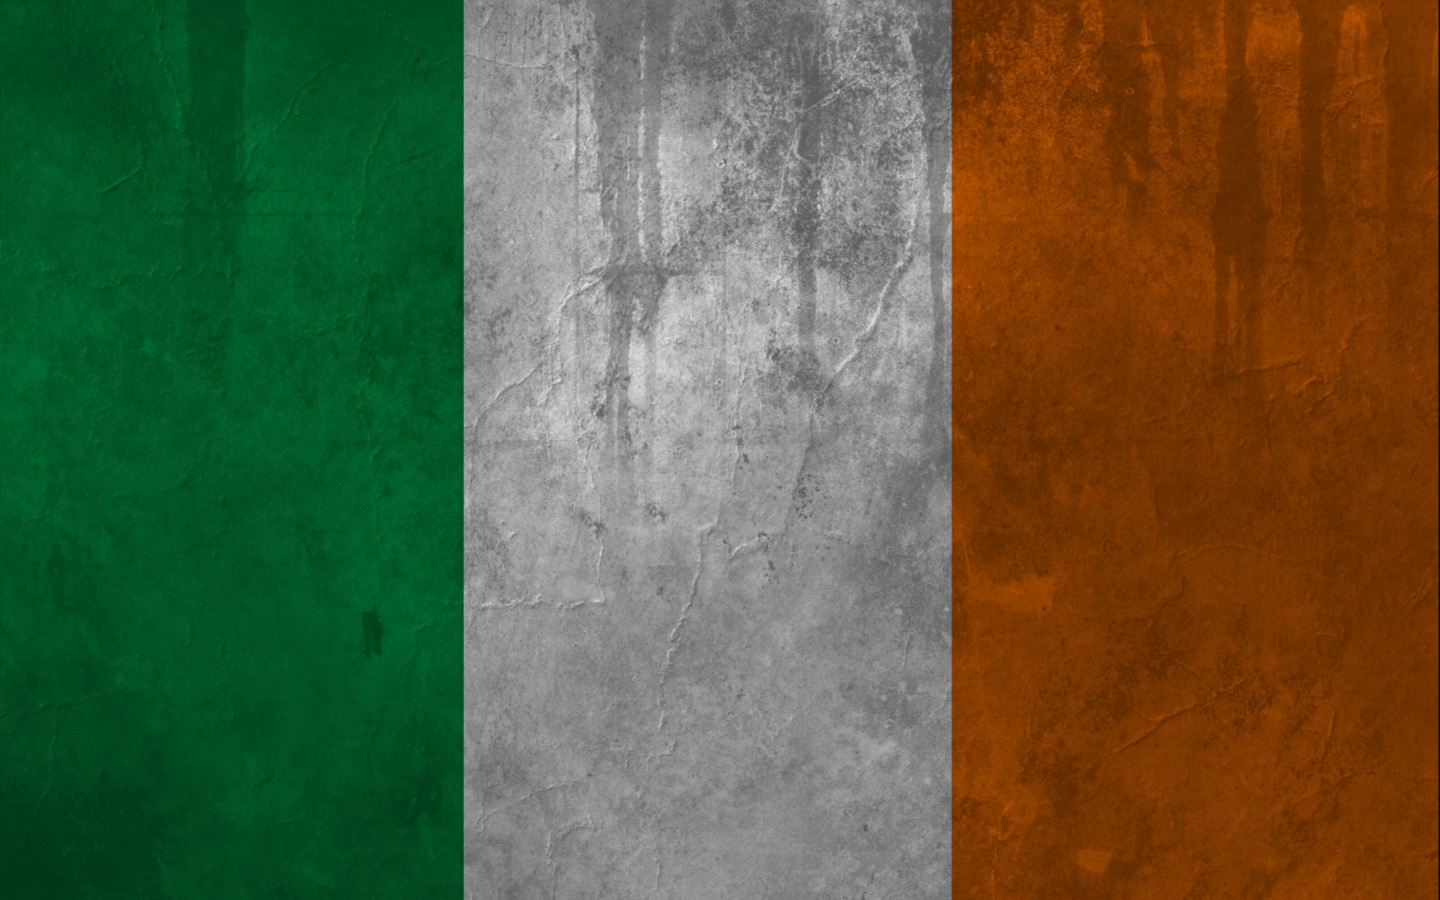 флаг ирландии картинки